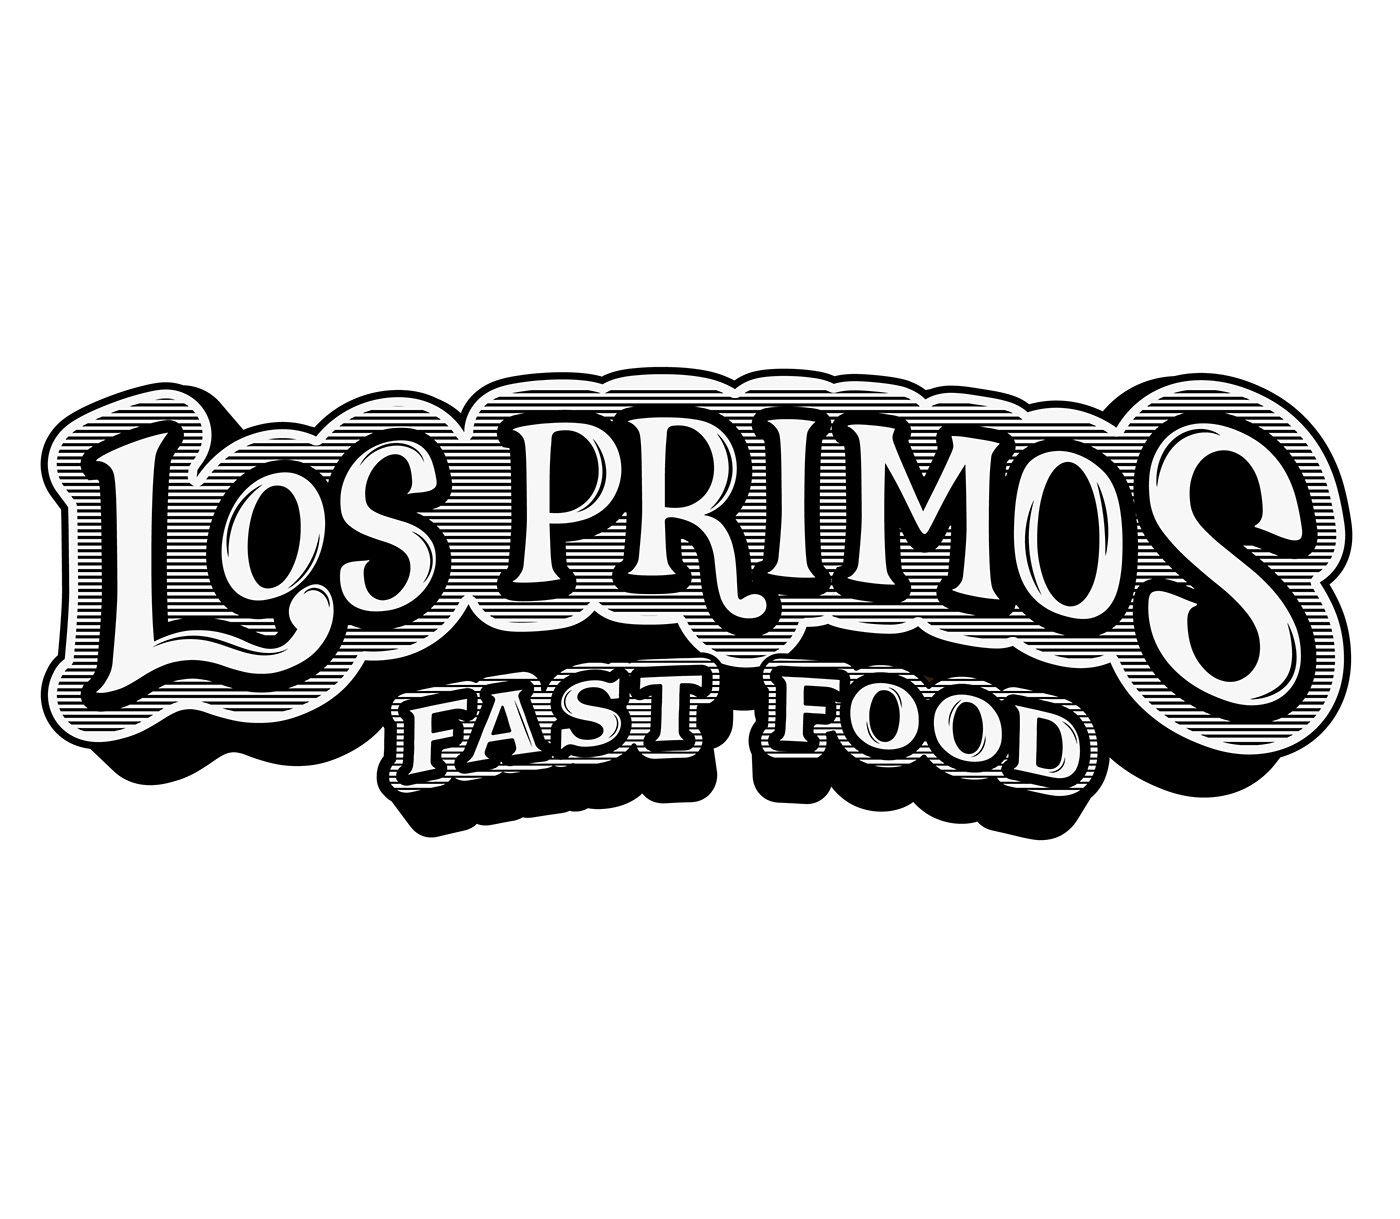 Primos Logo - Fast Food Los Primos on Behance